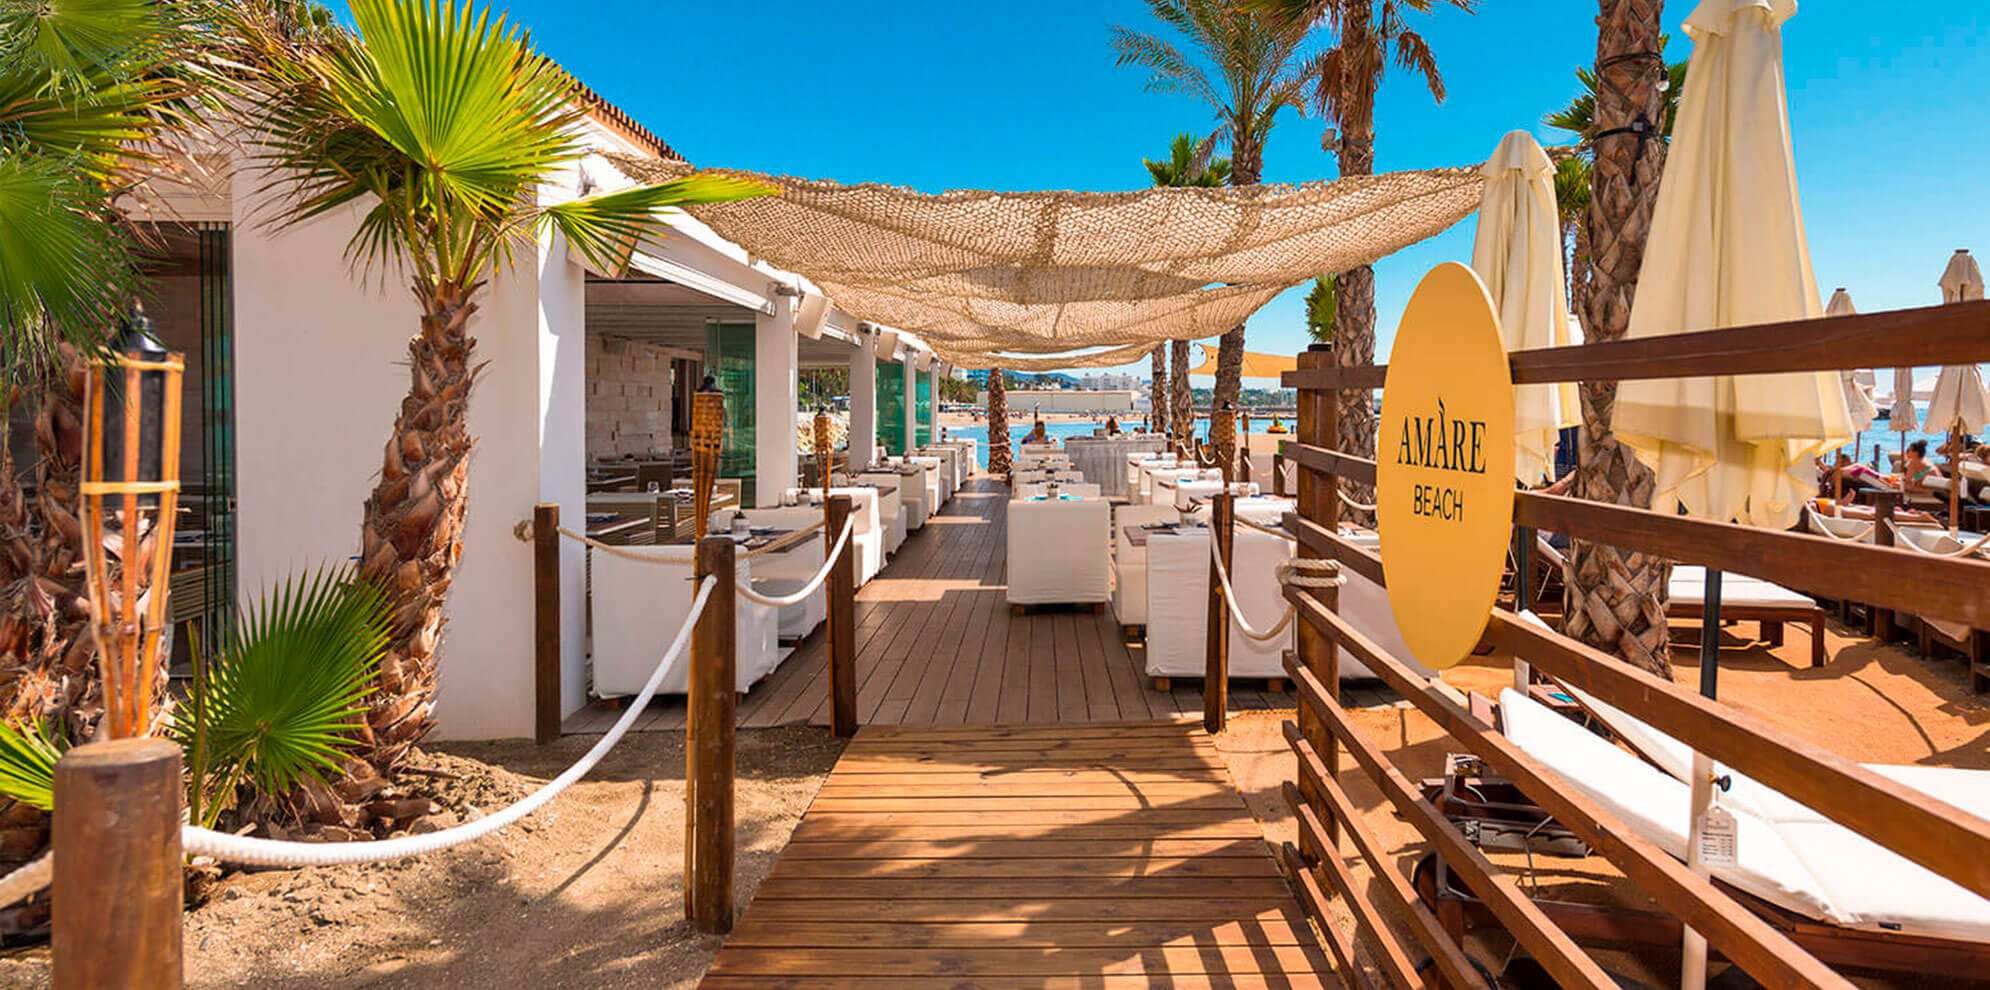 Marbella Beach Club | Amàre Beach Club Marbella